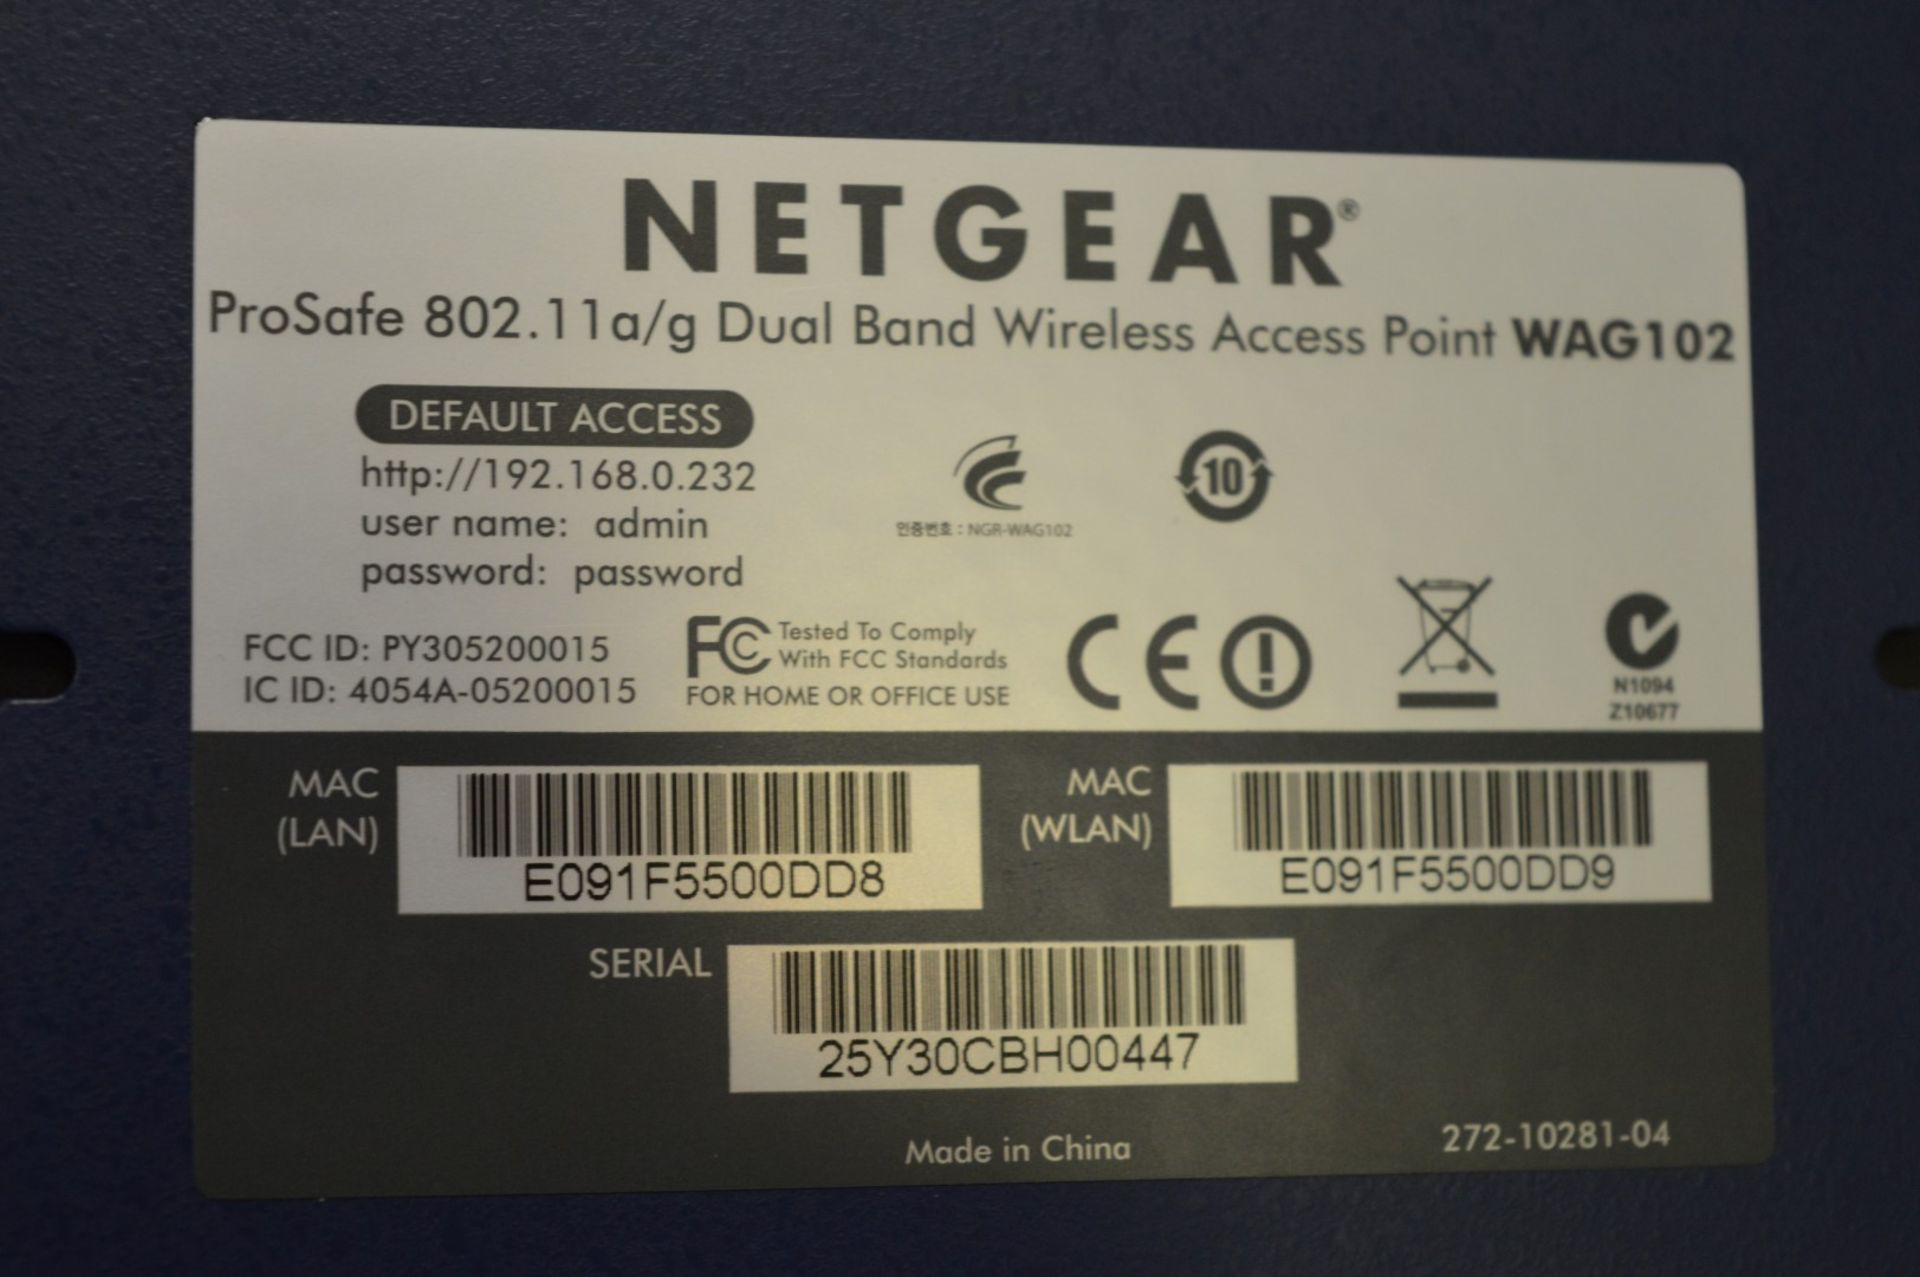 1 x Netgear WAG102 ProSafe Dual Band Wireless Access Point - Wireless Access Point For Upto 128 - Image 3 of 3